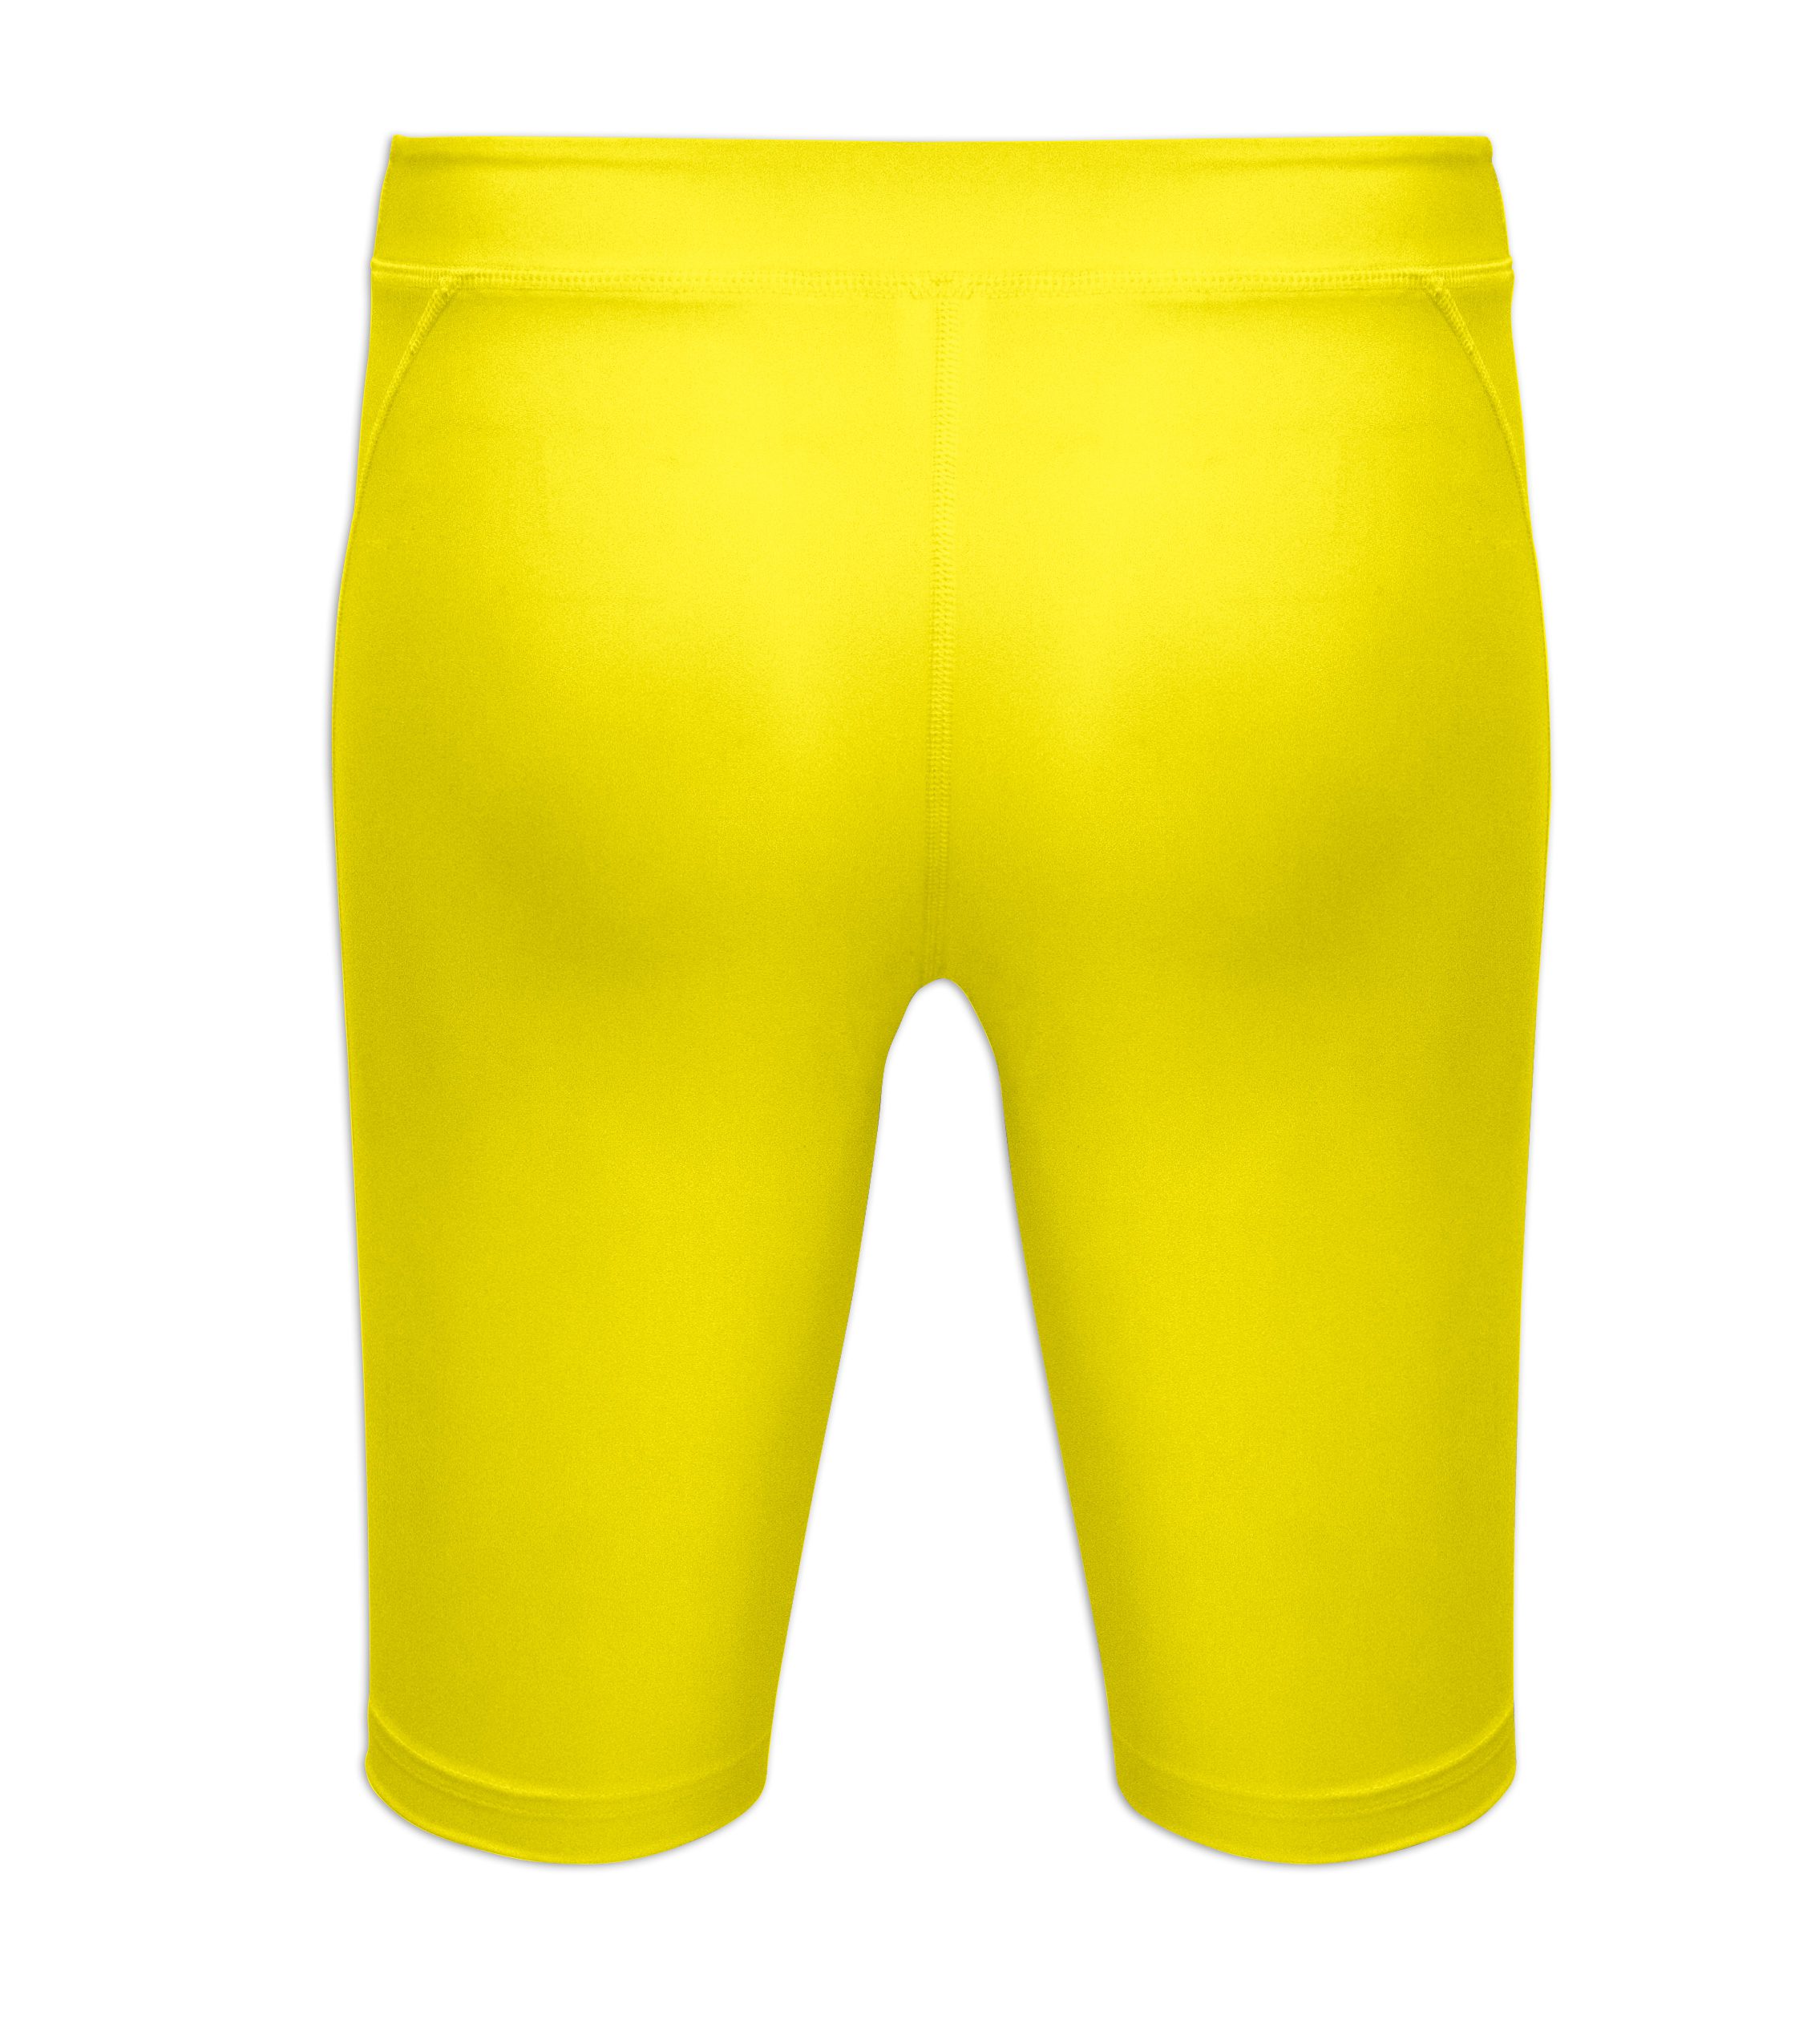 Ladies Compression Shorts - Yellow